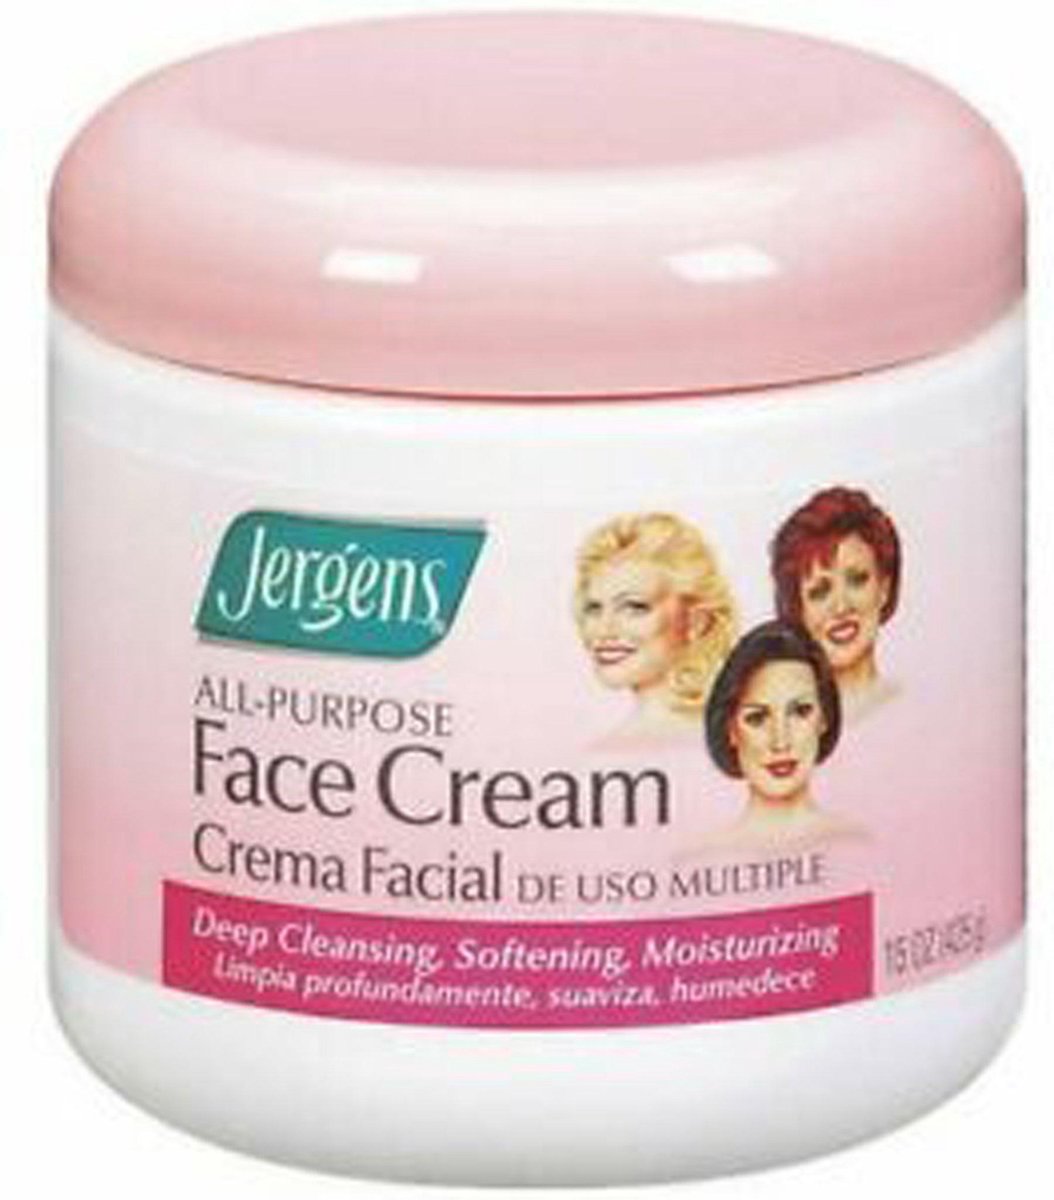 Jergens All-Purpose Face Cream 425g